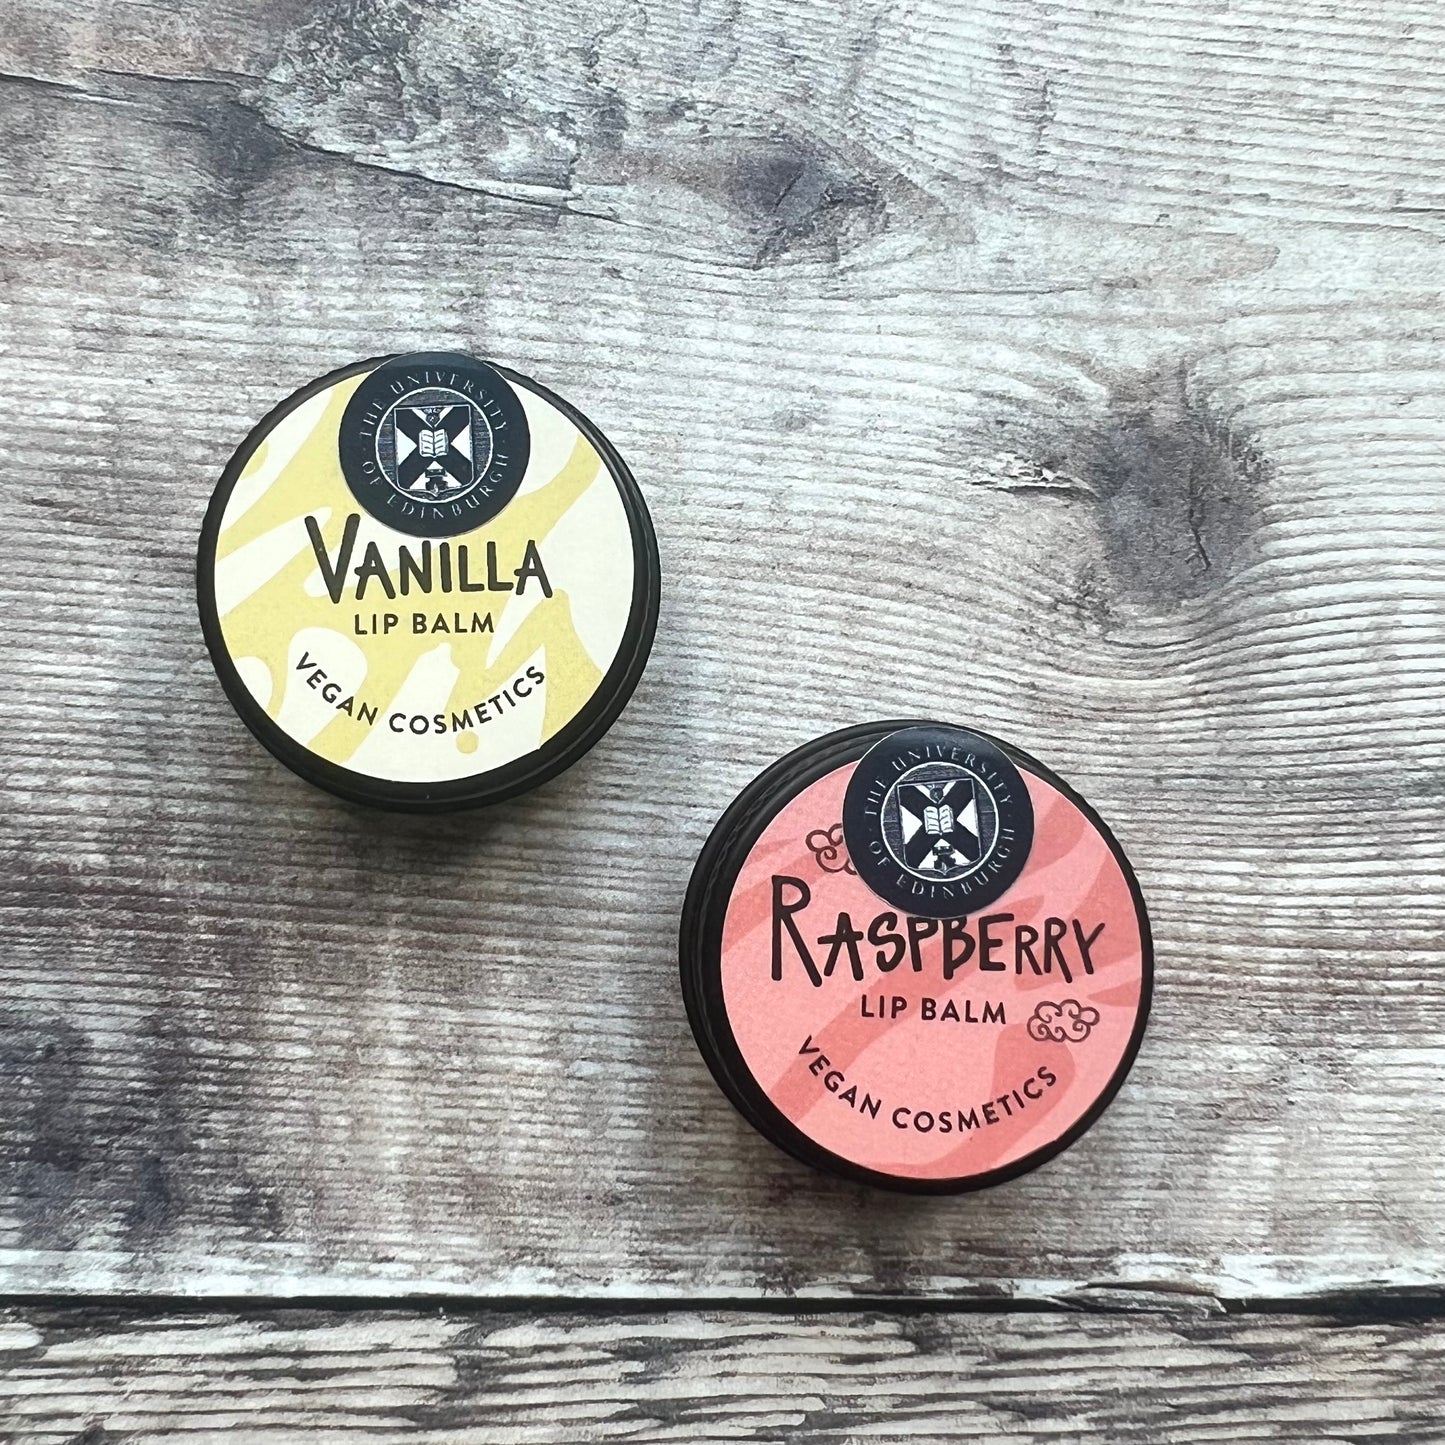 Vanilla and Raspberry lip balm tins featuring the University crest